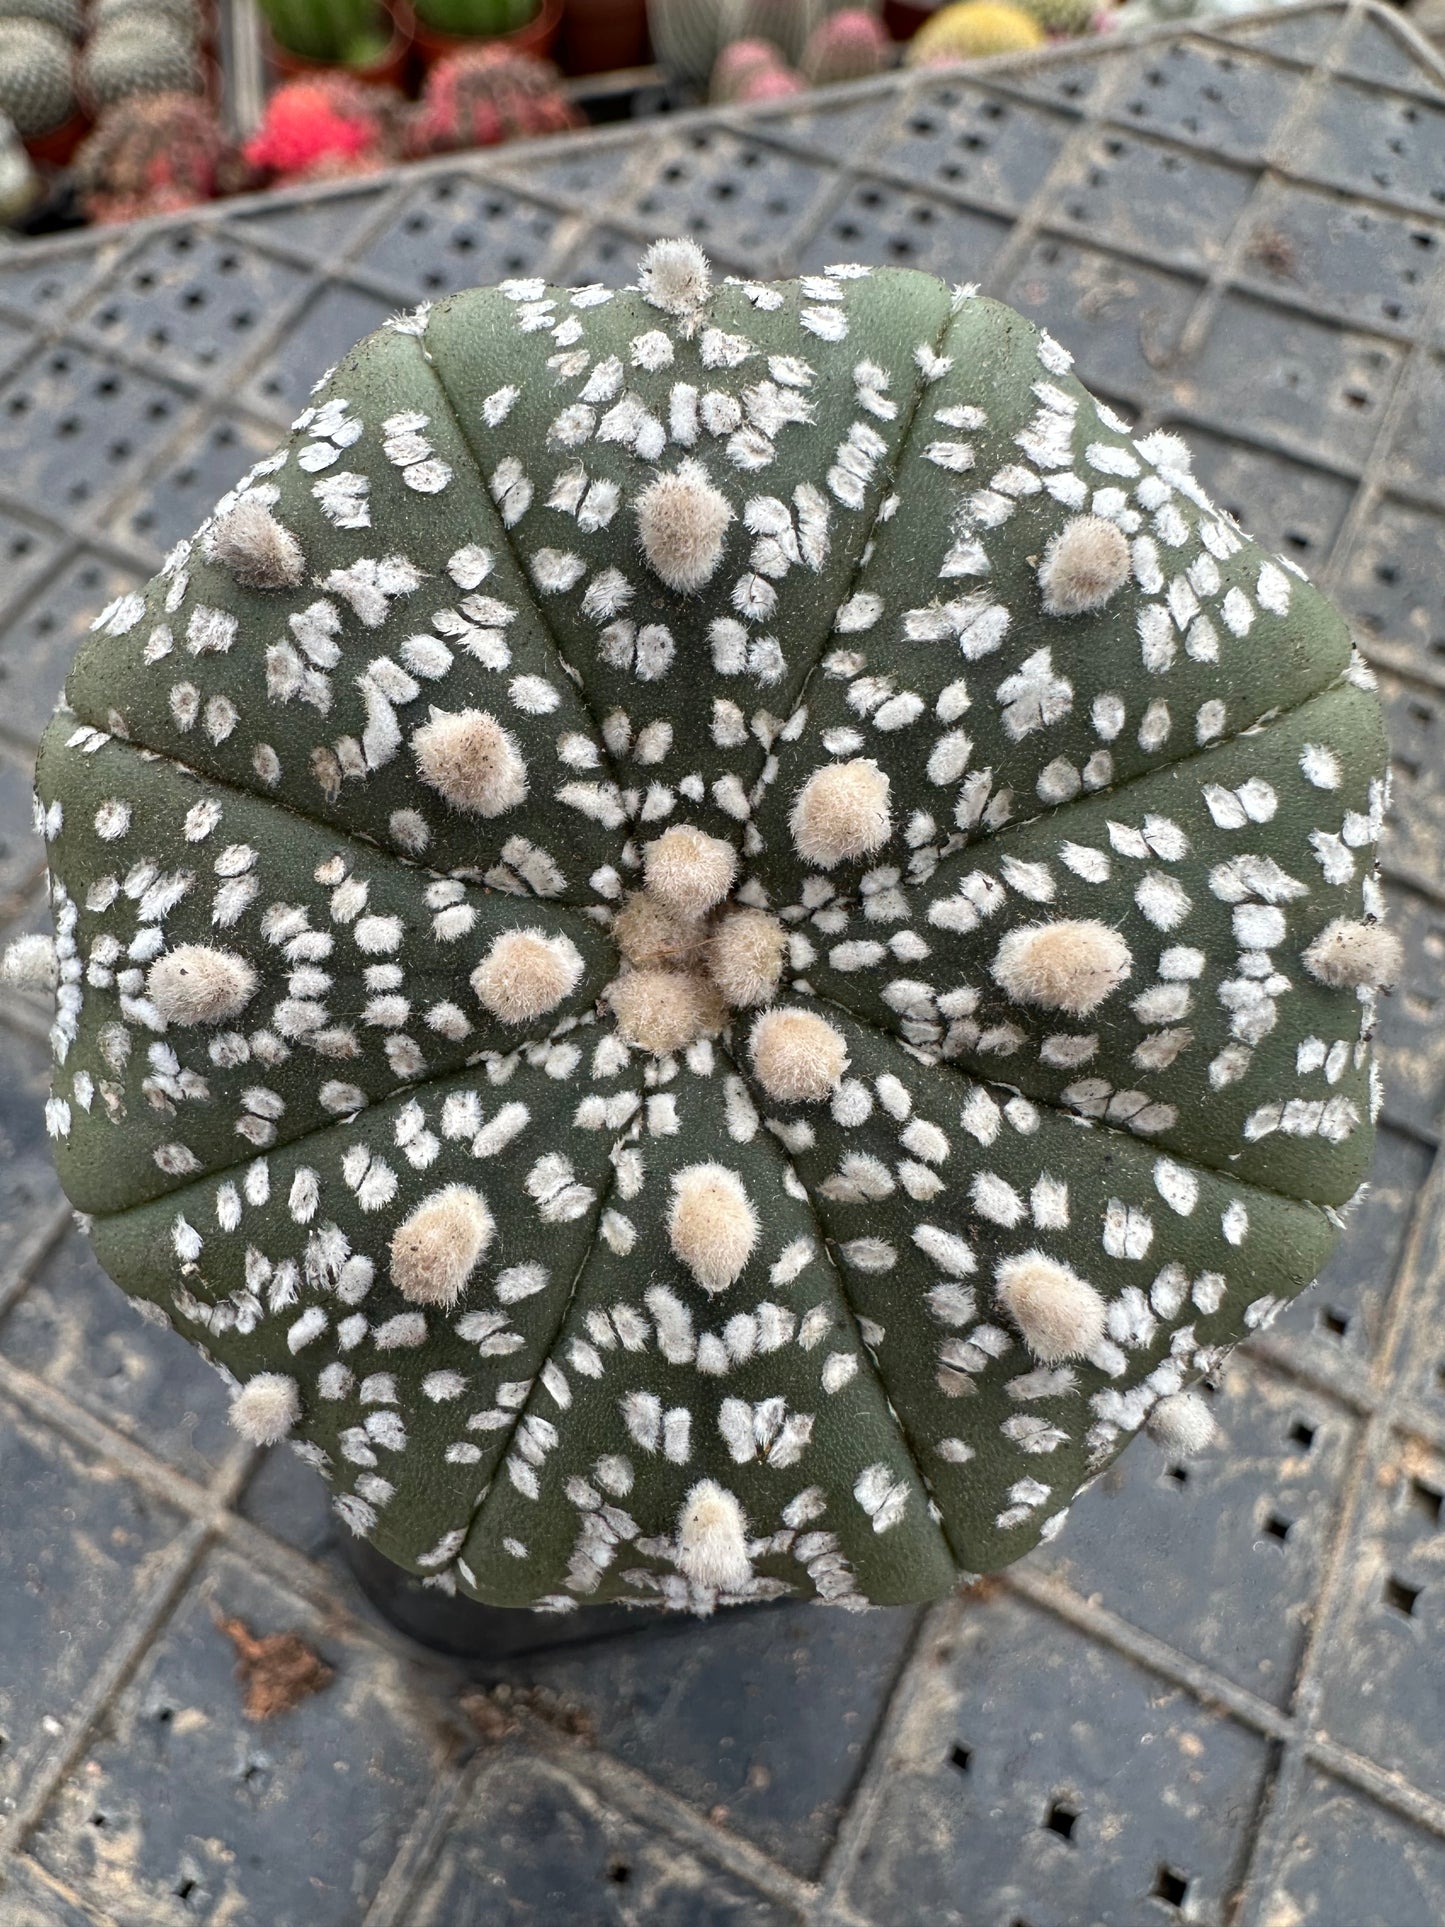 Astrophytum asterias'super'5cm/ Cactus Echinopsis tubiflora / Variegated Natural Live Plants Succulents